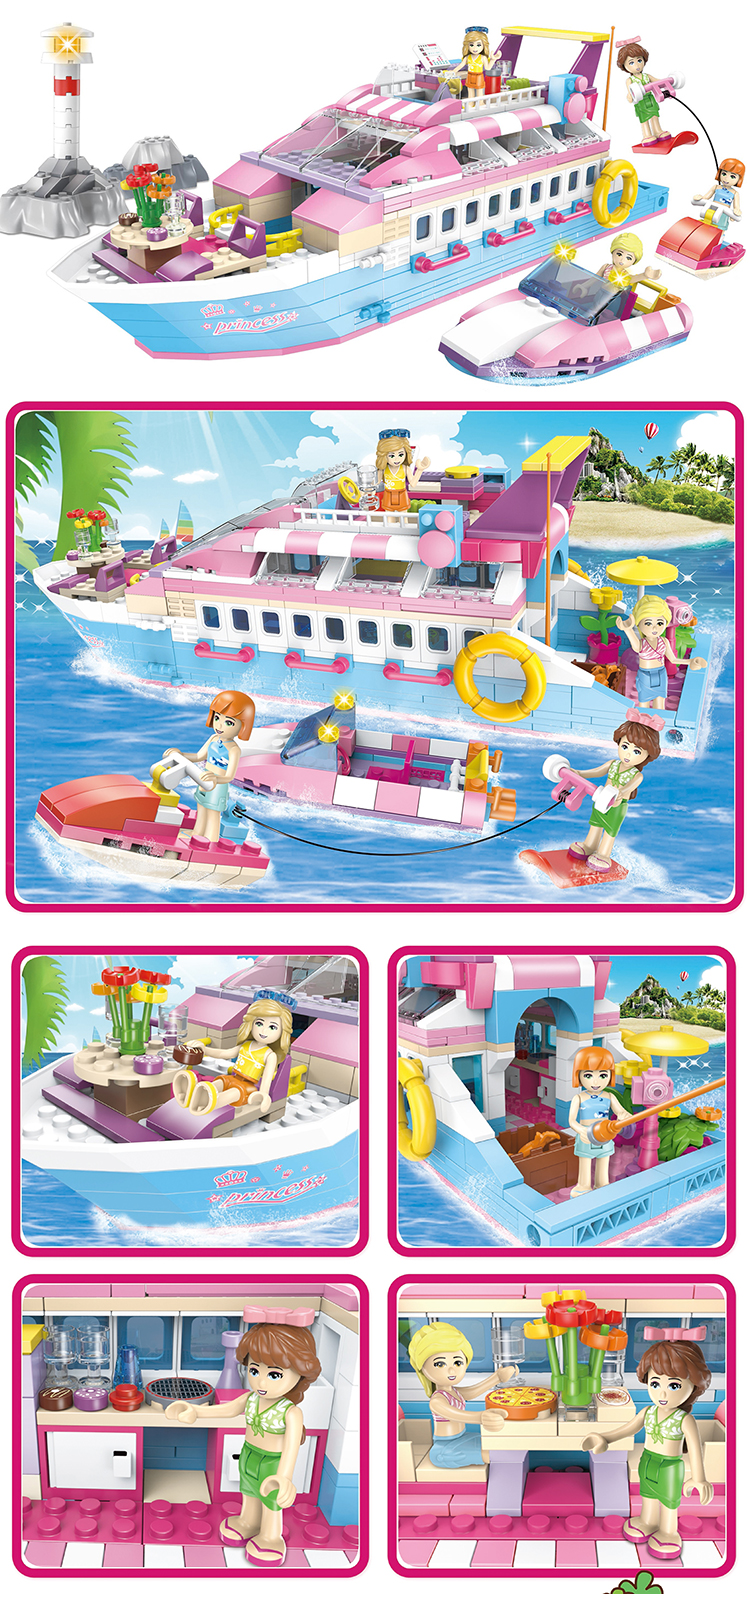 WOMA TOYS Amazon Hot Sale Pleasure Boat Model Children Girls Christmas Building Blocks Bricks Educational Construction Toy